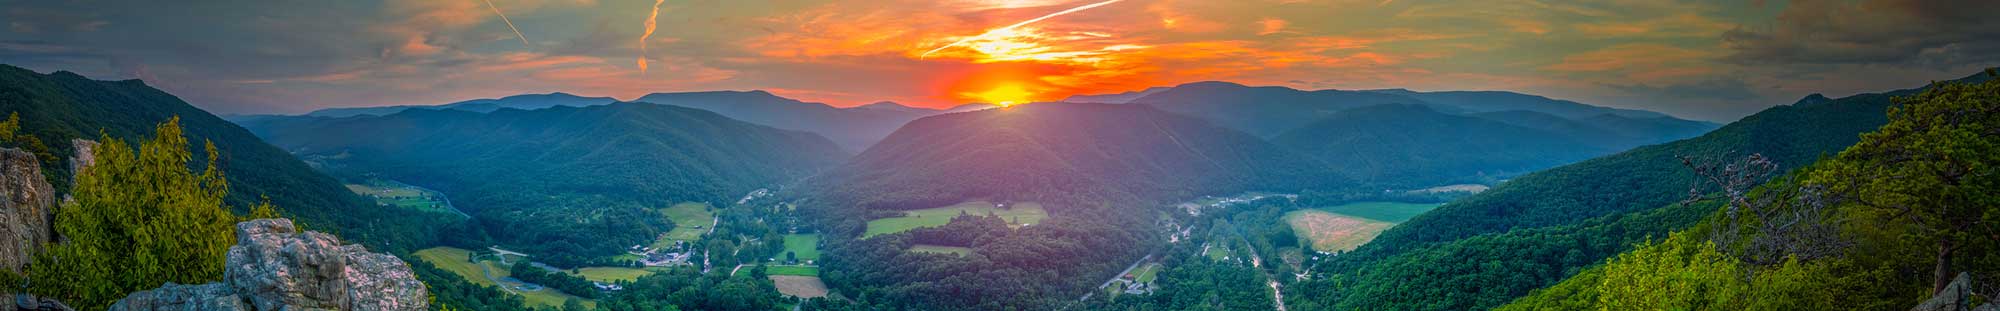 sun rising over West Virginia Mountains